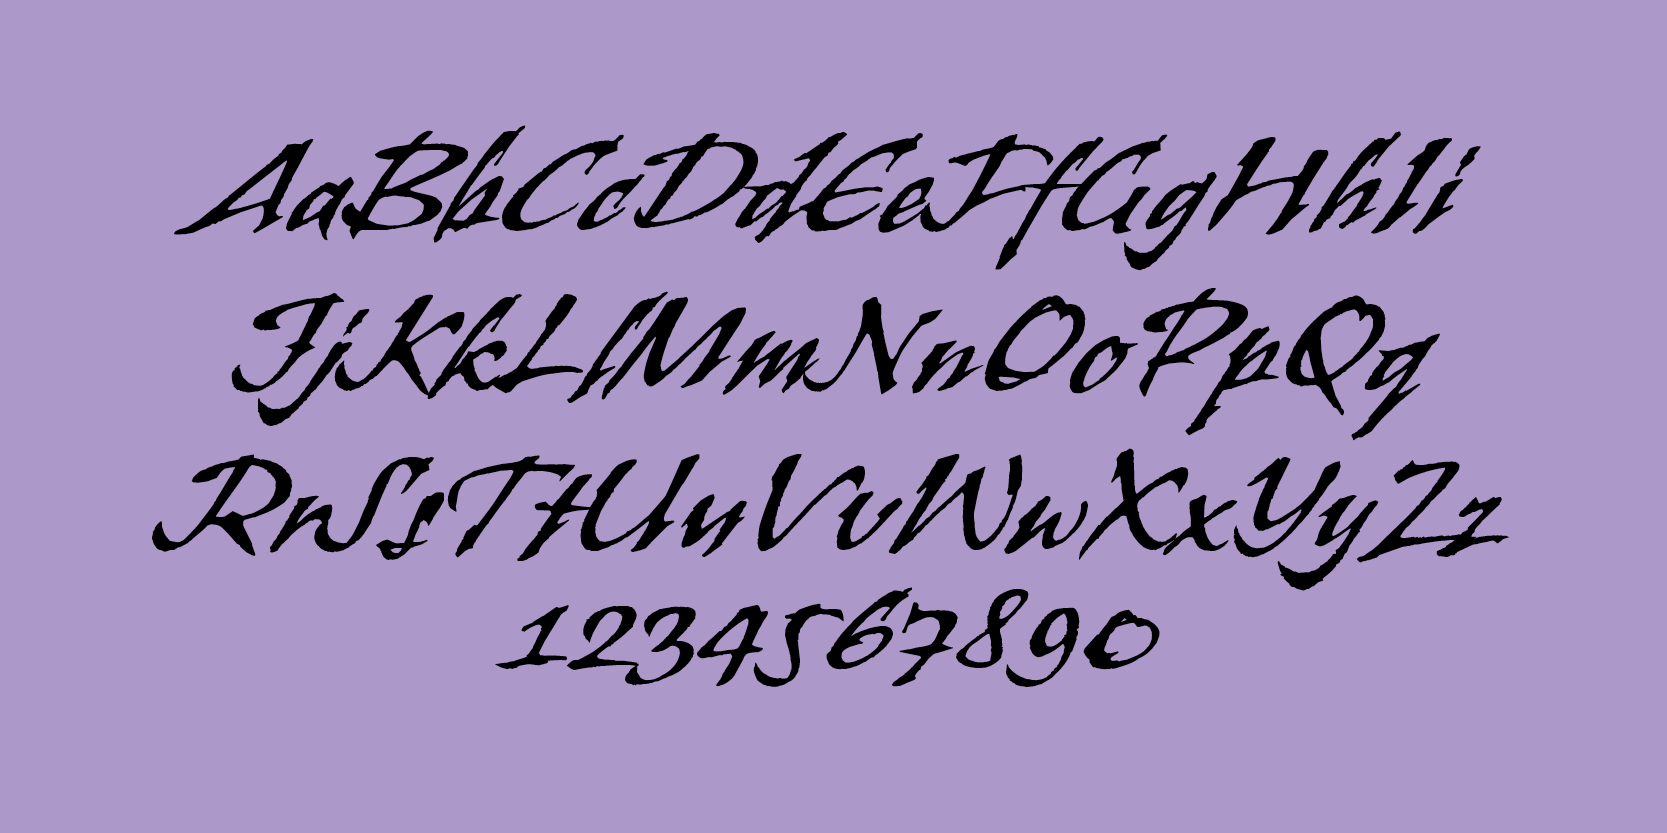 Card displaying Banshee typeface in various styles